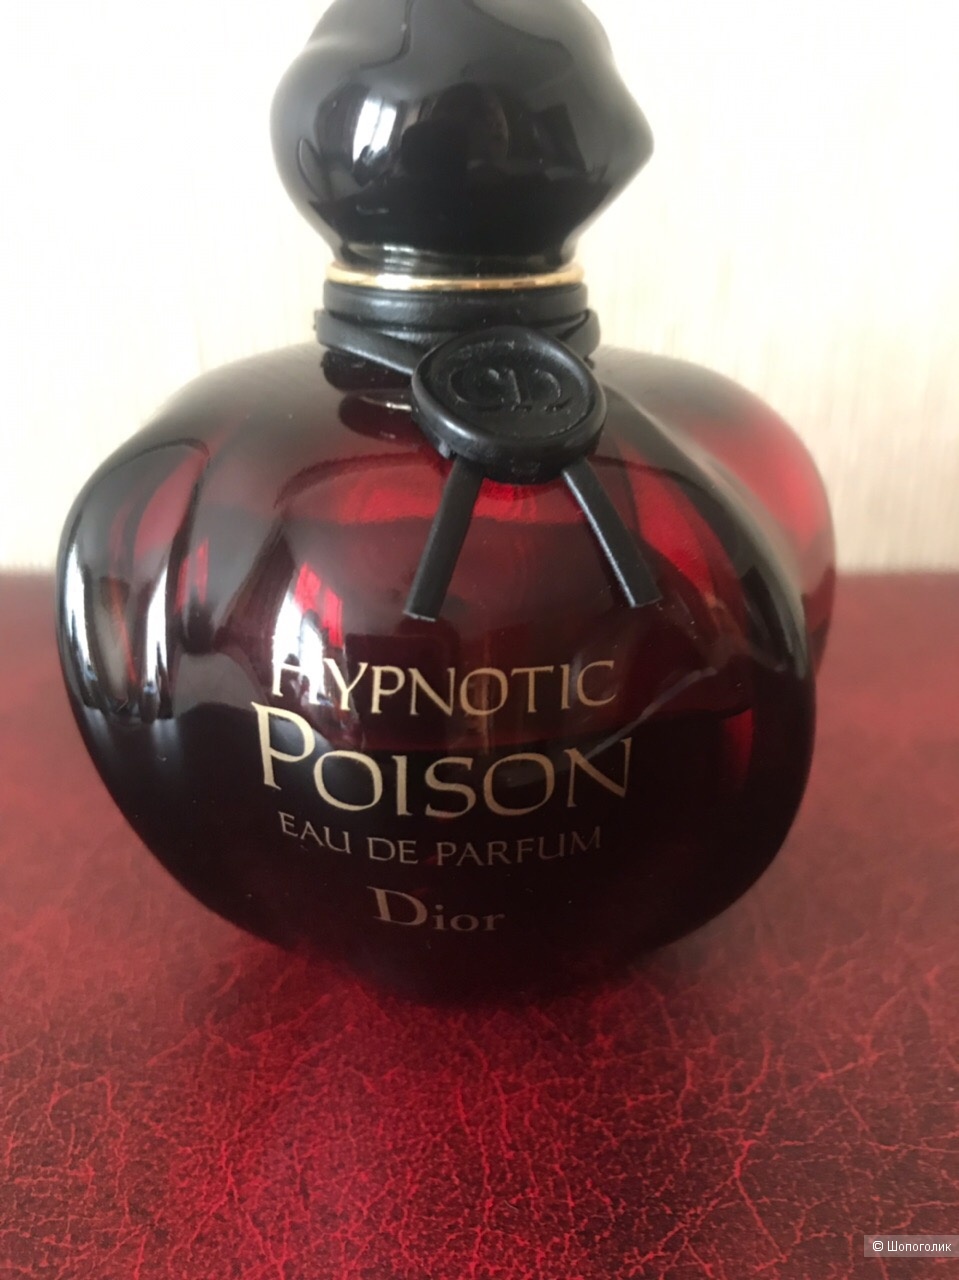 Парфюмерная вода Christian Dior "Hypnotic poison", остаток 50 мл.